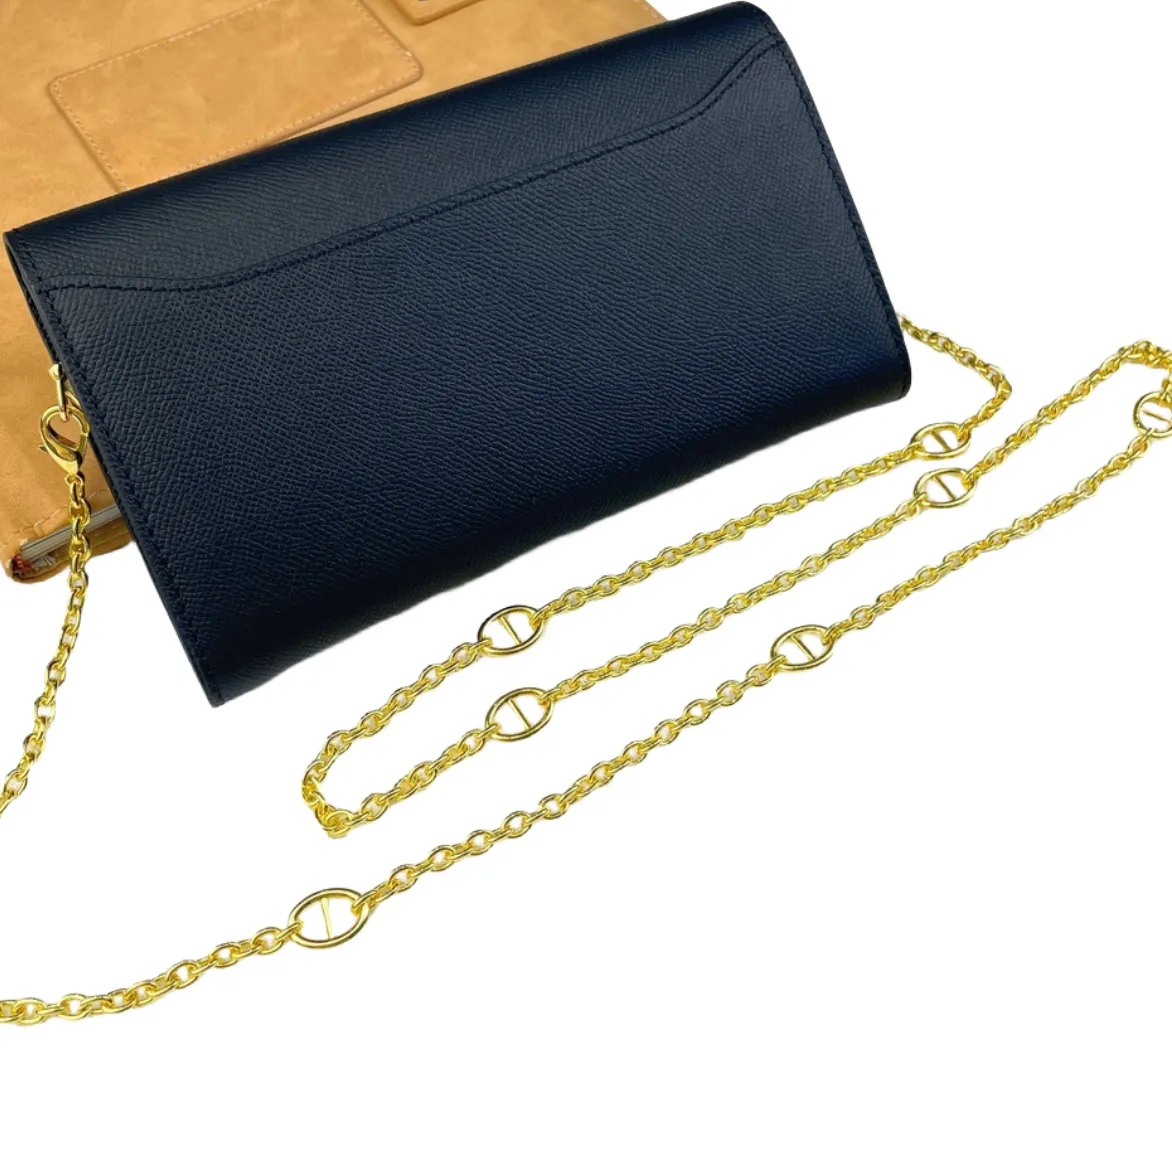 designer bag tote bag womens handbag women designers comprehensive bag clutch shoulder womenes purse bag fashion bags